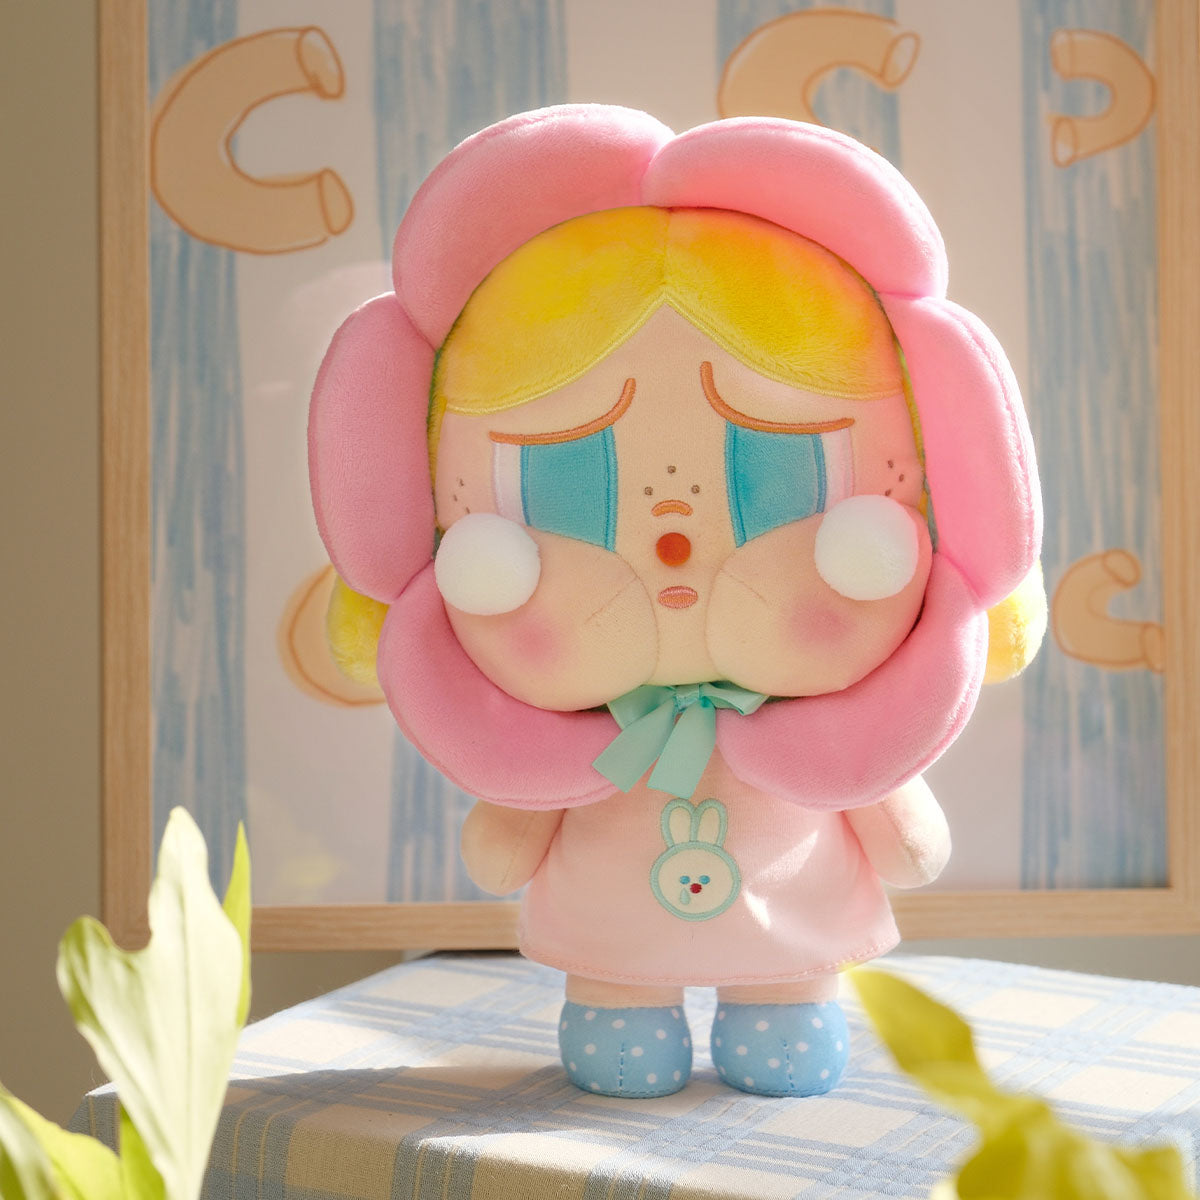 【New】Pop Mart CRYBABY Sad Club Series-Plush Doll